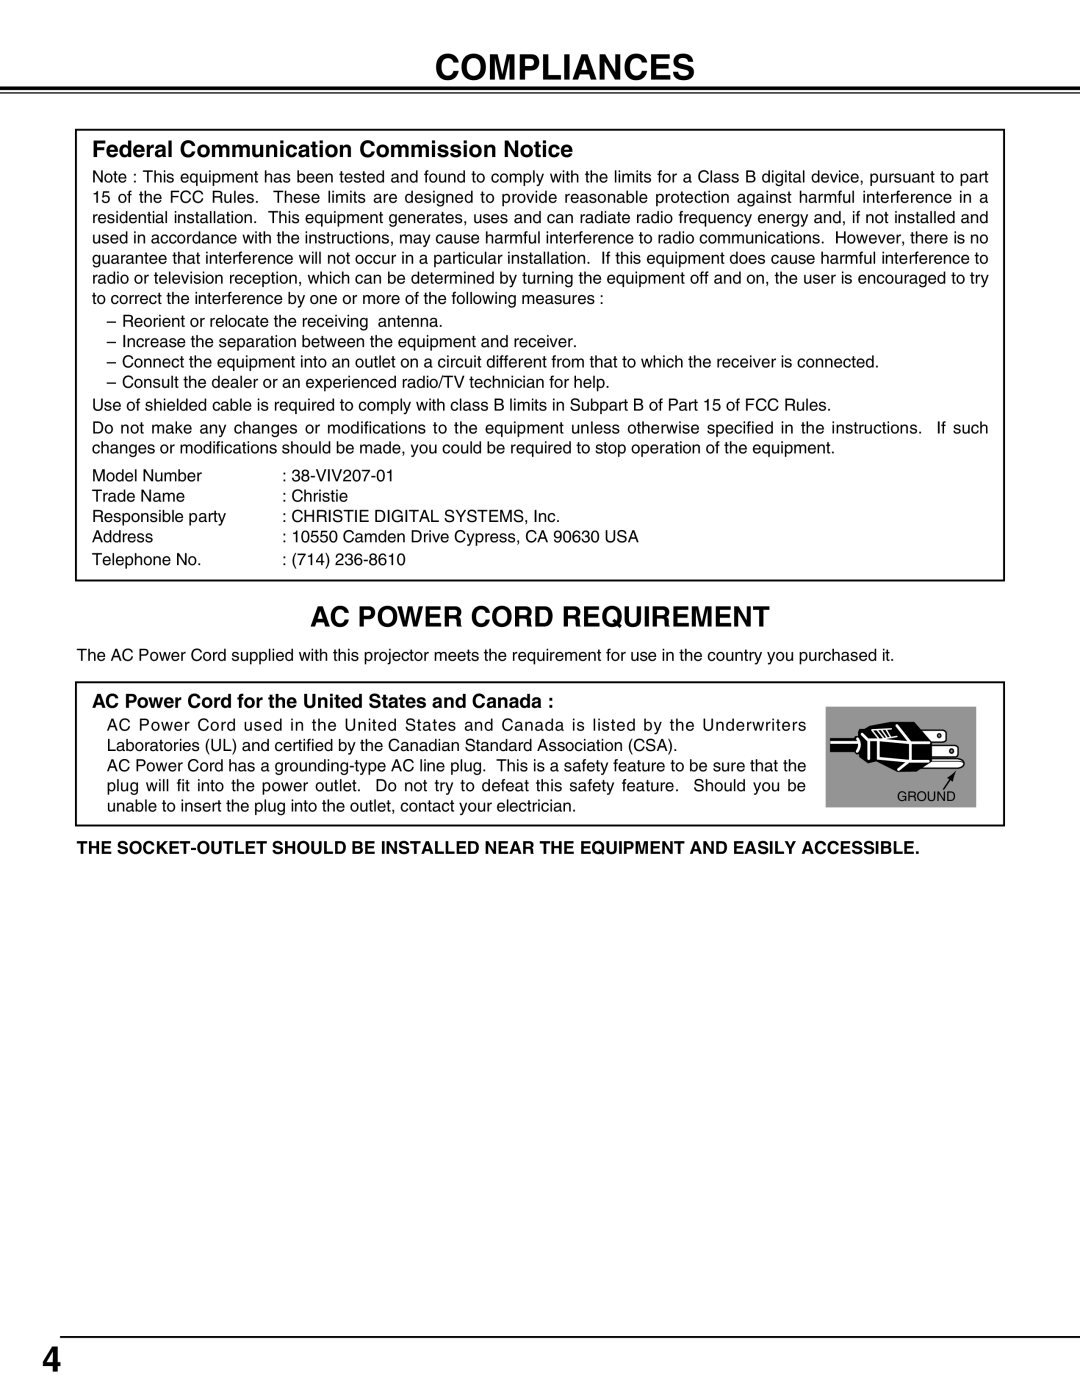 Christie Digital Systems 38-VIV207-01 Compliances, Ac Power Cord Requirement, Federal Communication Commission Notice 